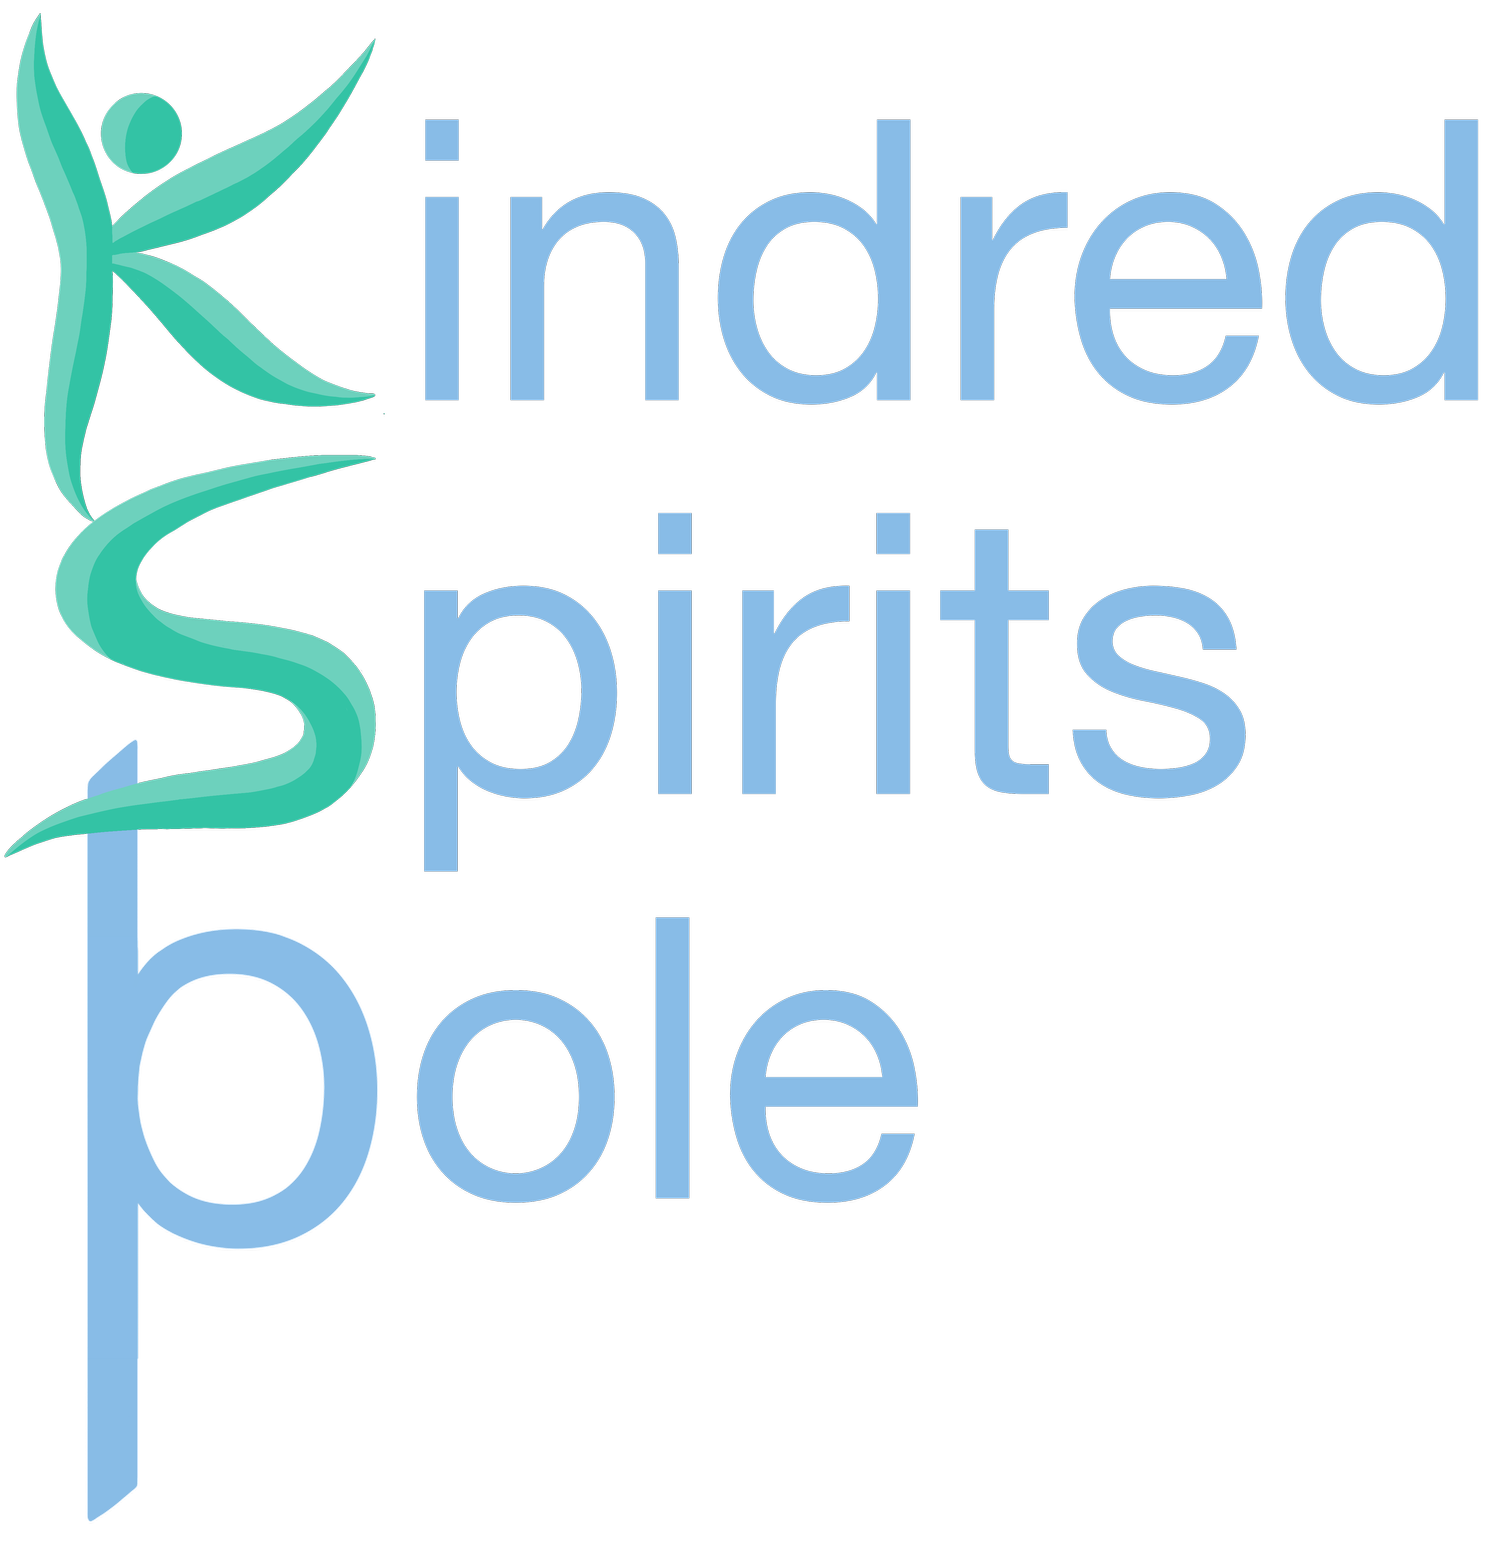 Kindred Spirits Pole